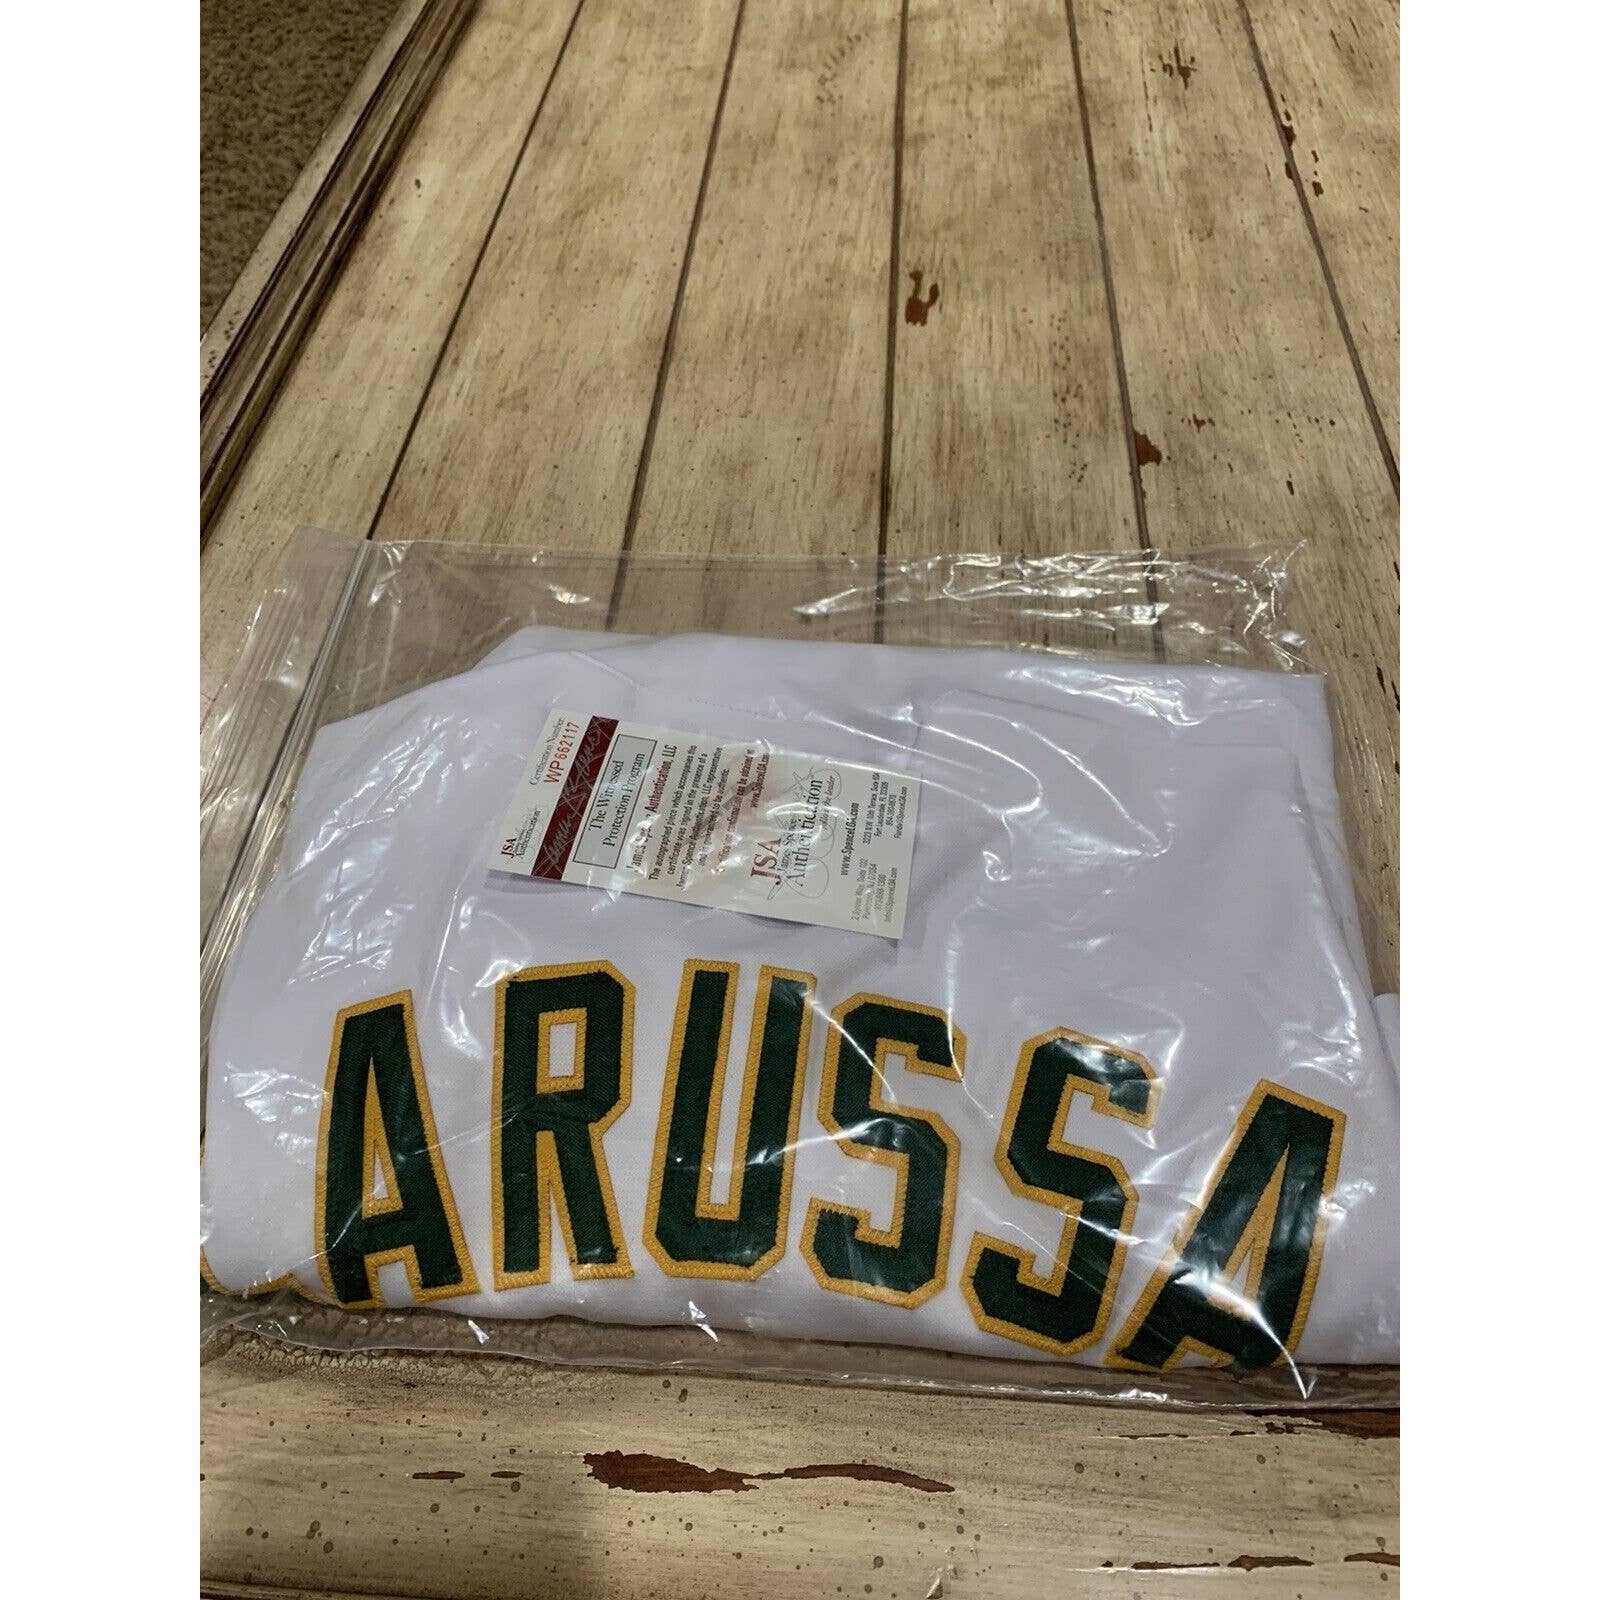 Tony LaRussa Autographed/Signed Jersey JSA COA La Russa Oakland Athletics A’s As - TreasuresEvolved